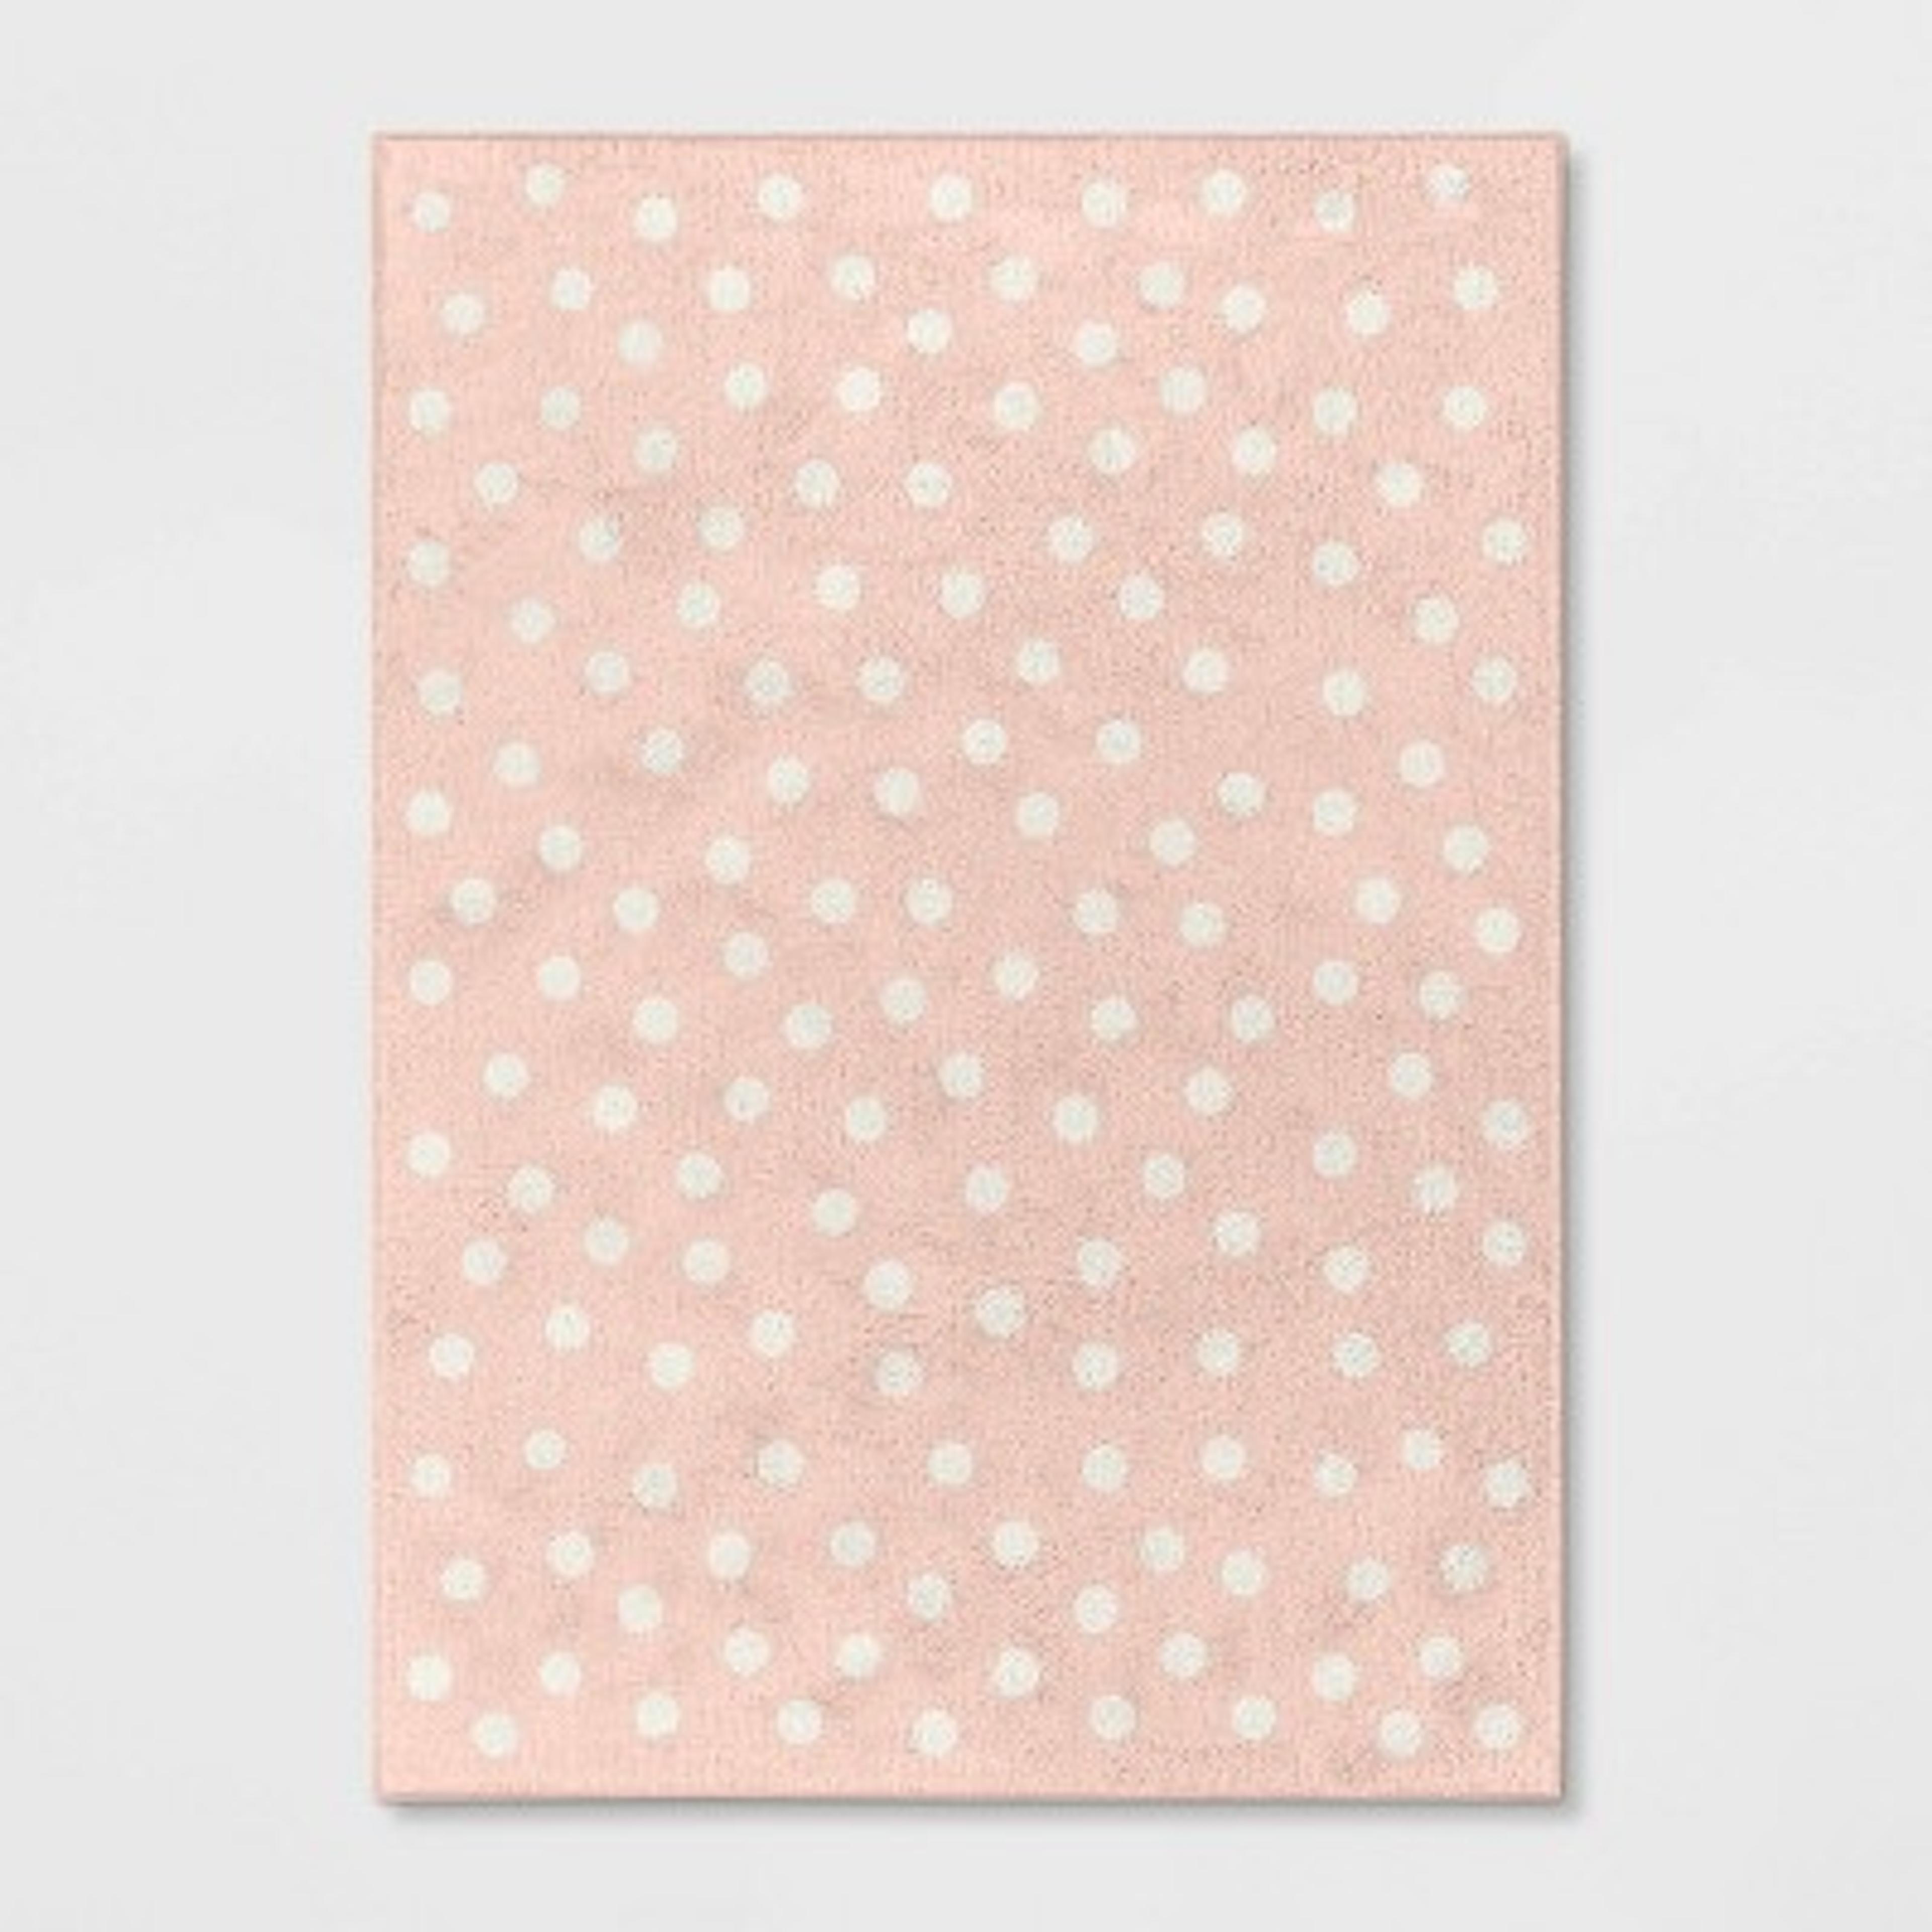 4'x5'6" Polka Dot Rug Pink/White - Pillowfort™